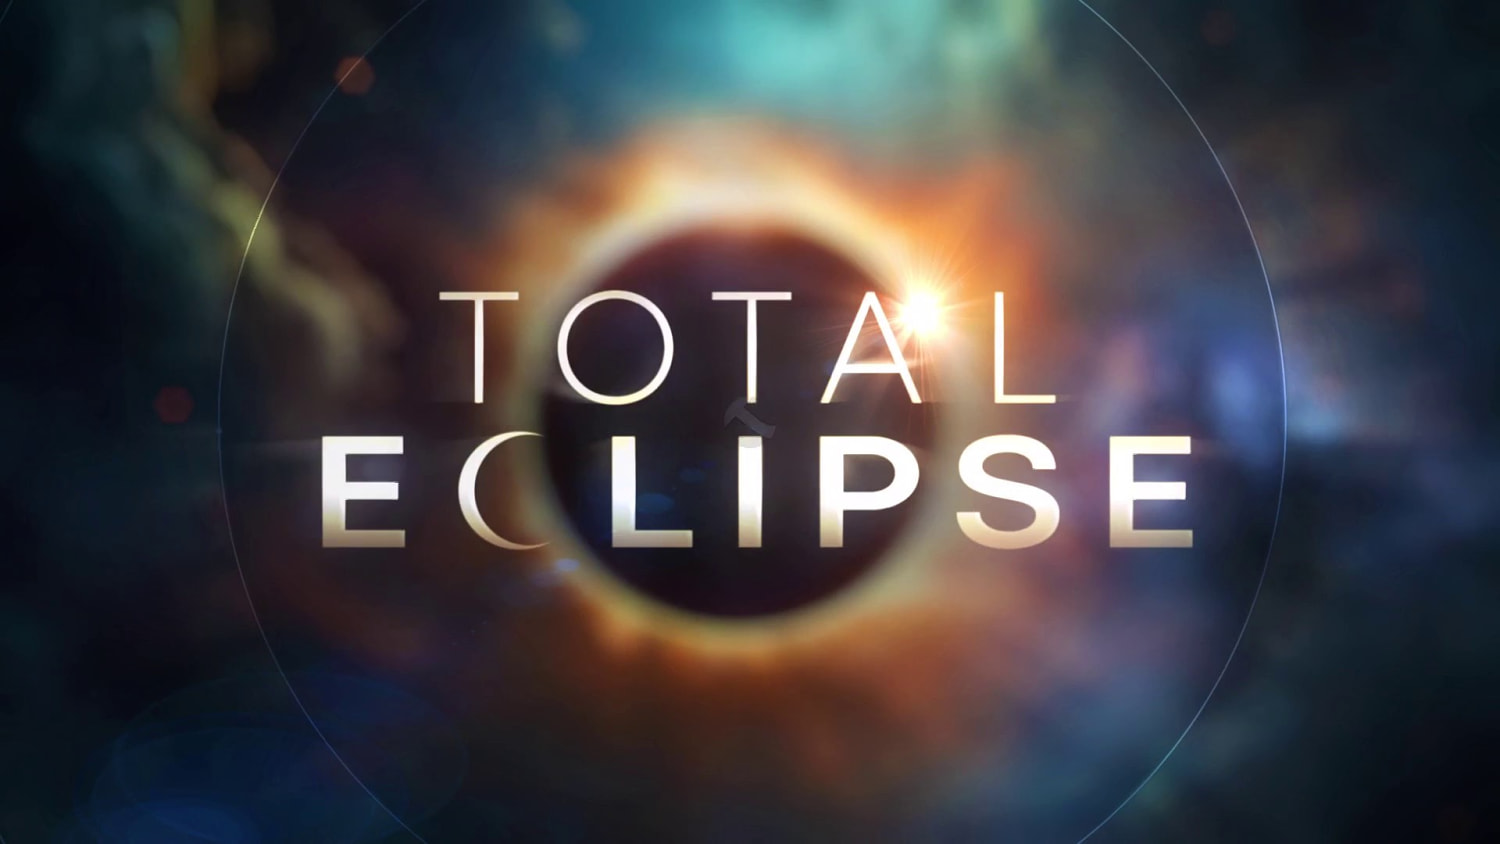 Total Eclipse: Rare solar eclipse passes across North America